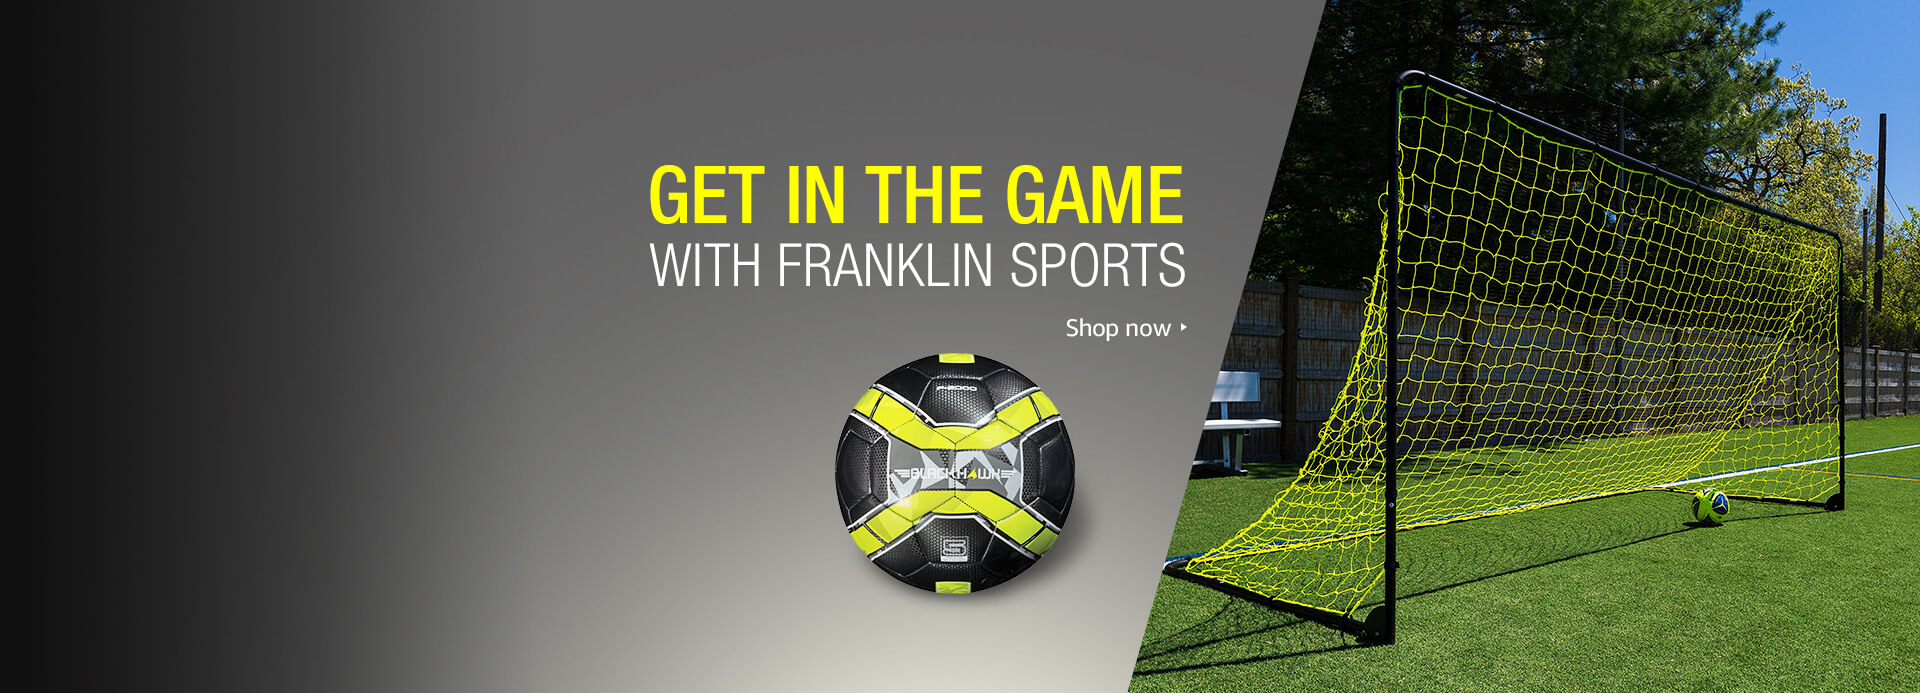 Team Sports | Amazon.com: Baseball, Basketball, Football ...